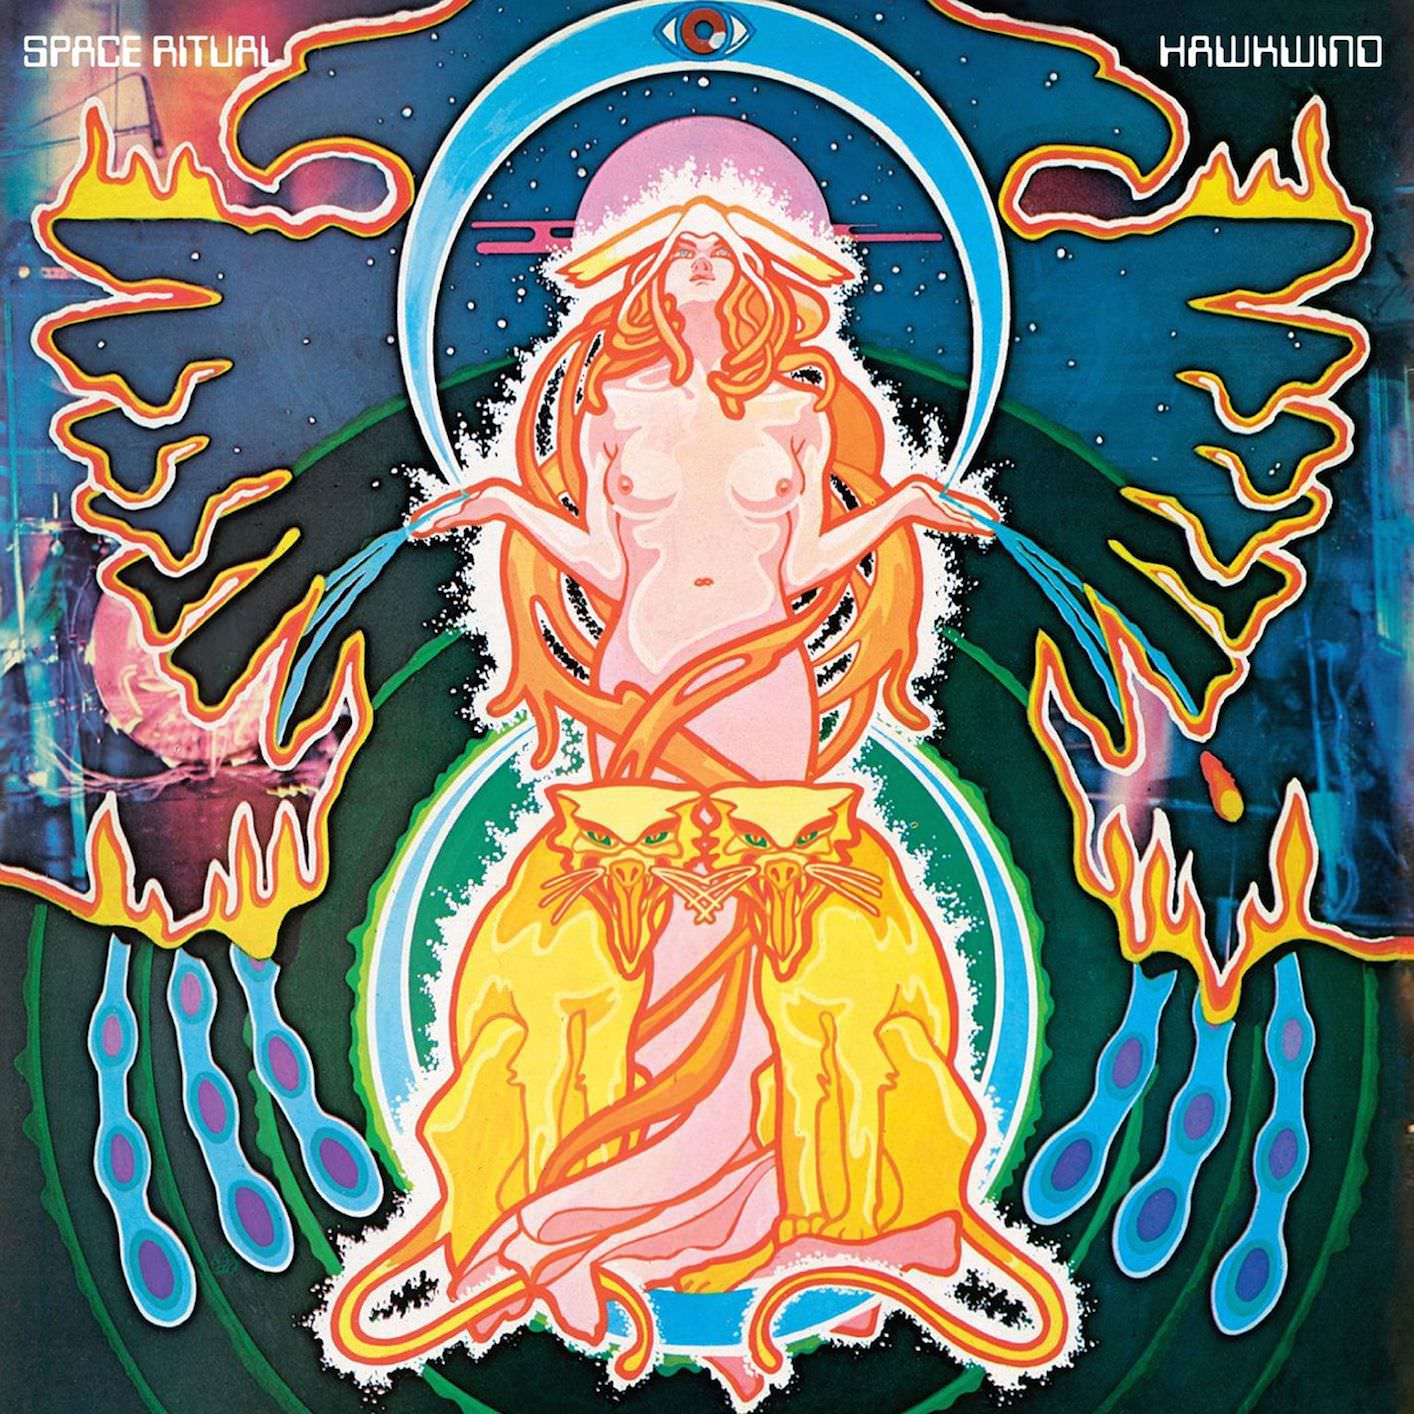 Hawkwind - The Space Ritual Alive (Original Master) (1973/2015) [7Digital FLAC 24bit/96kHz]